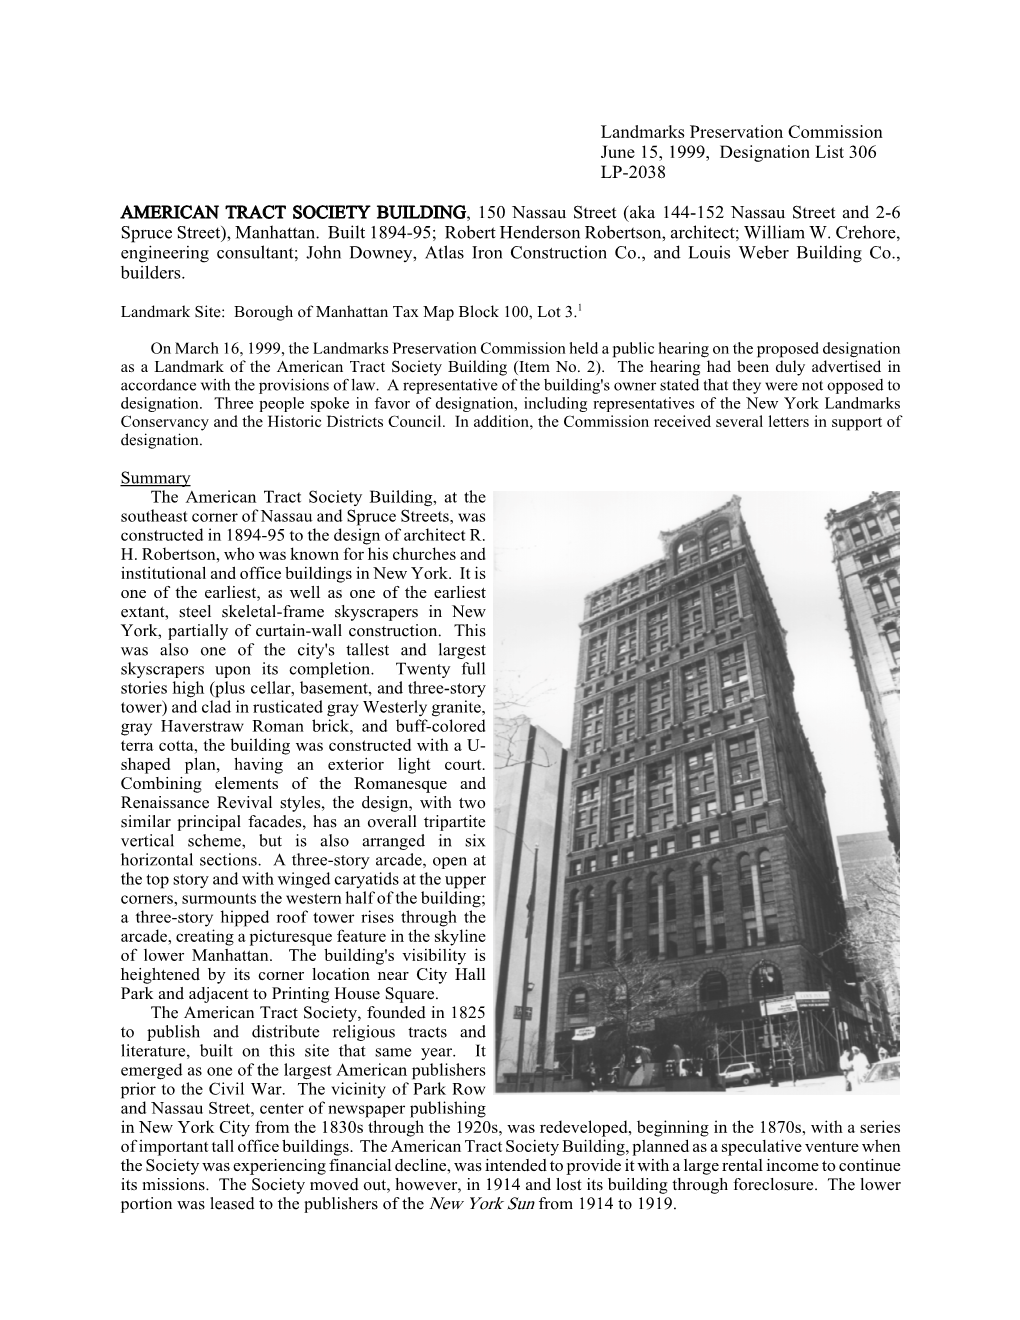 American Tract Society Building Designation Report